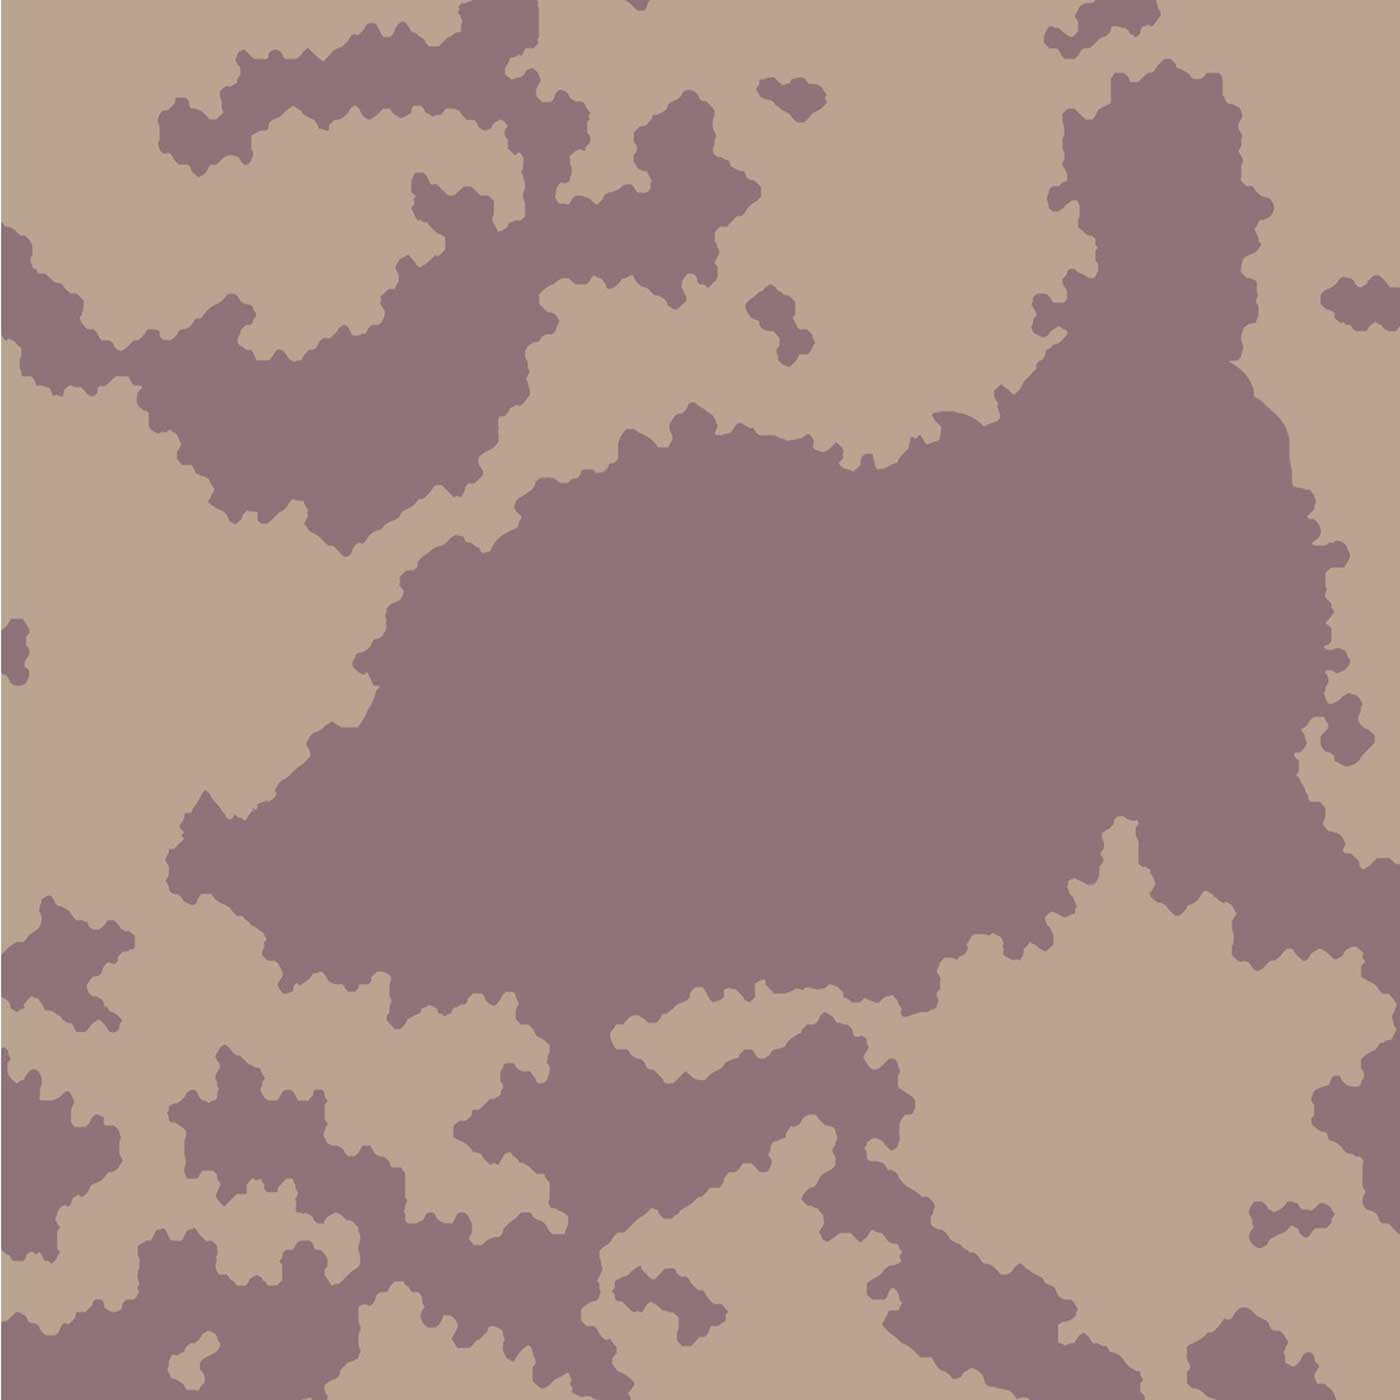 Pixelated nondescript map